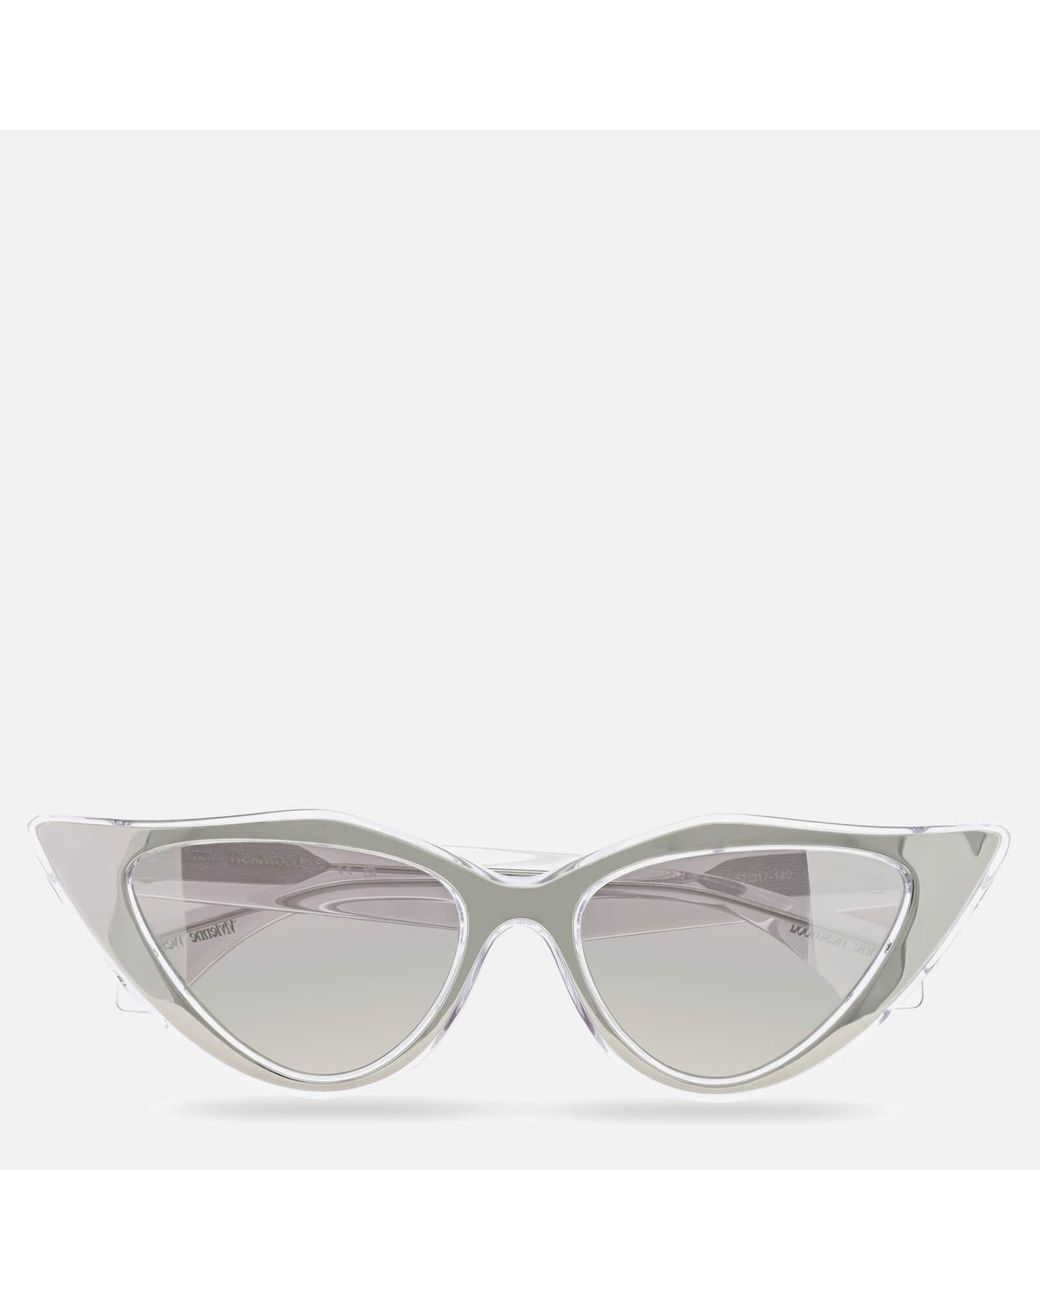 Vivienne Westwood Anouk Cat Eye Acetate Sunglasses | Lyst